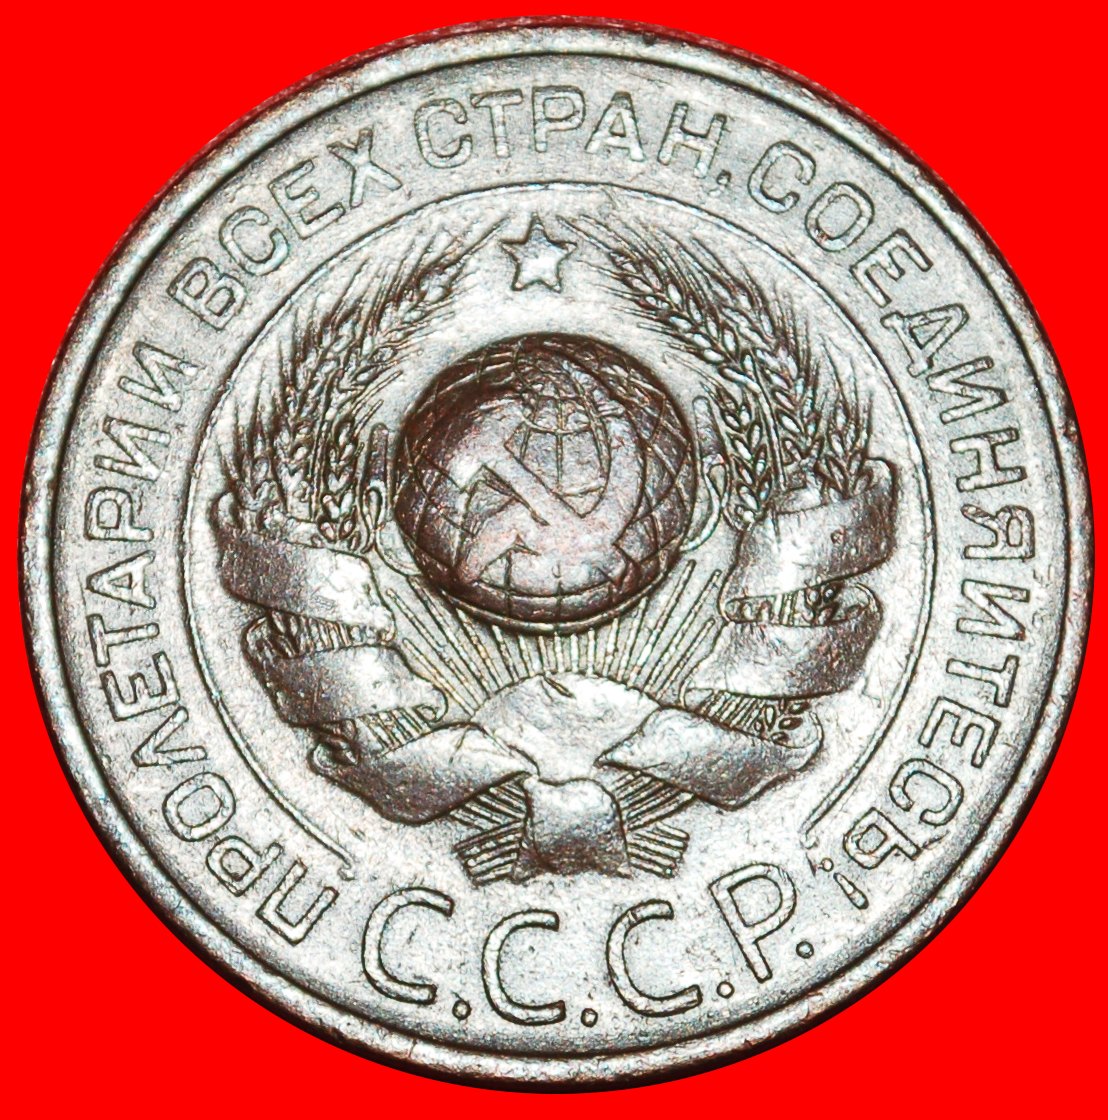  * LENIN 1870-1924:USSR (ex. russia)★3 KOPECKS 1924 NOT REEDED EDGE! UNCOMMON★LOW START ★ NO RESERVE!   